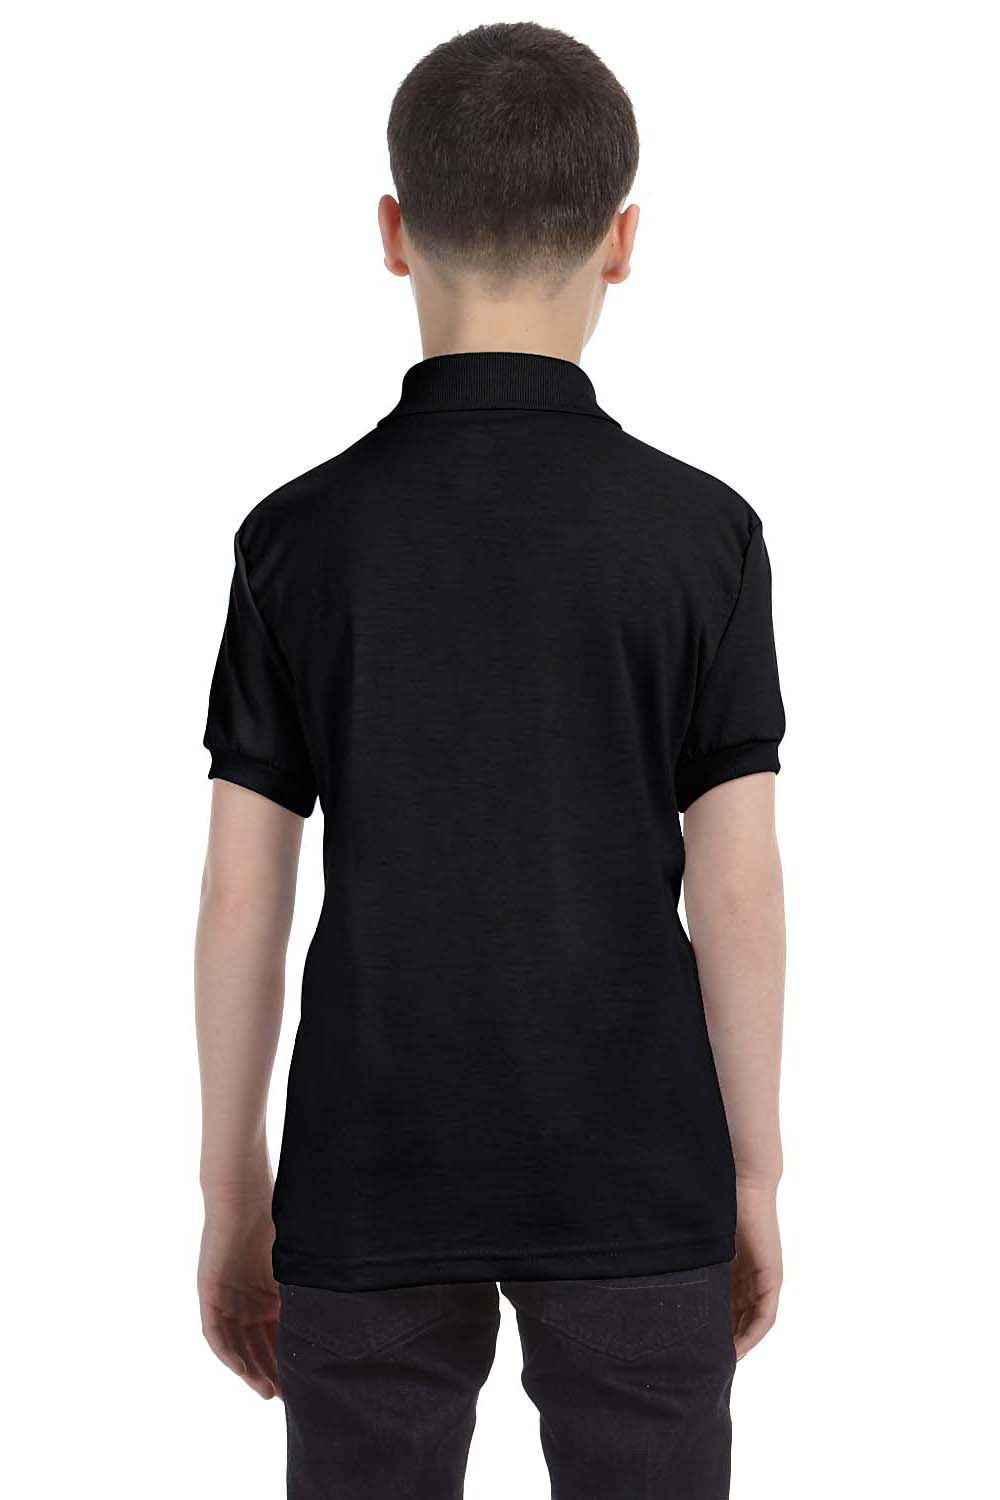 Hanes 054Y Youth EcoSmart Short Sleeve Polo Shirt Black Back